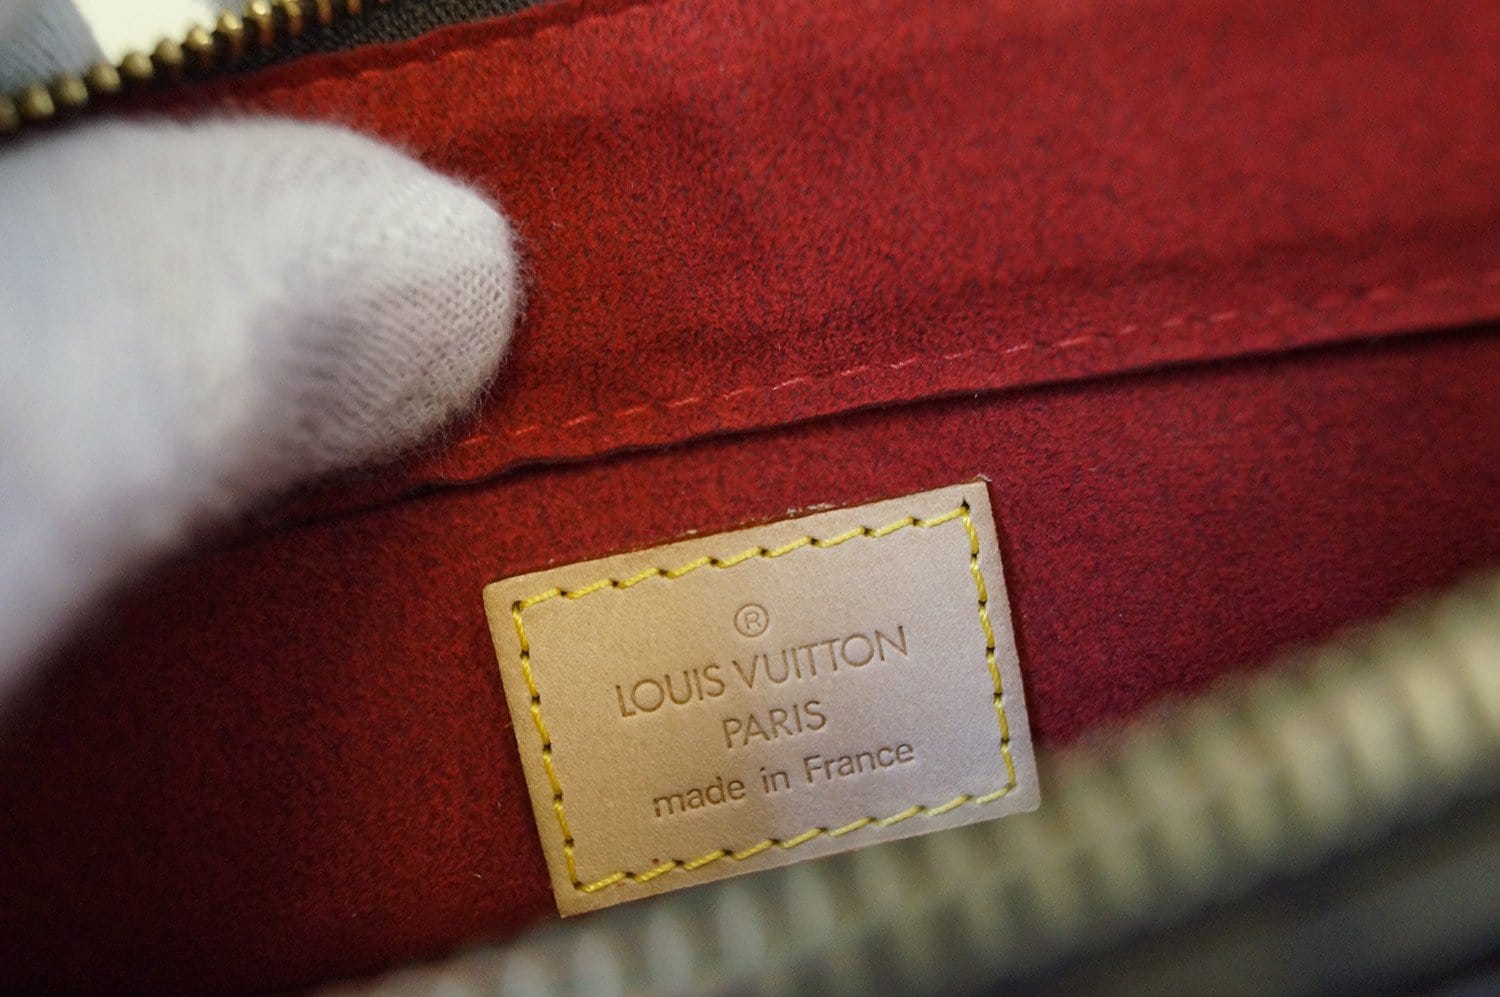 Louis Vuitton Viva Cite Gm - For Sale on 1stDibs